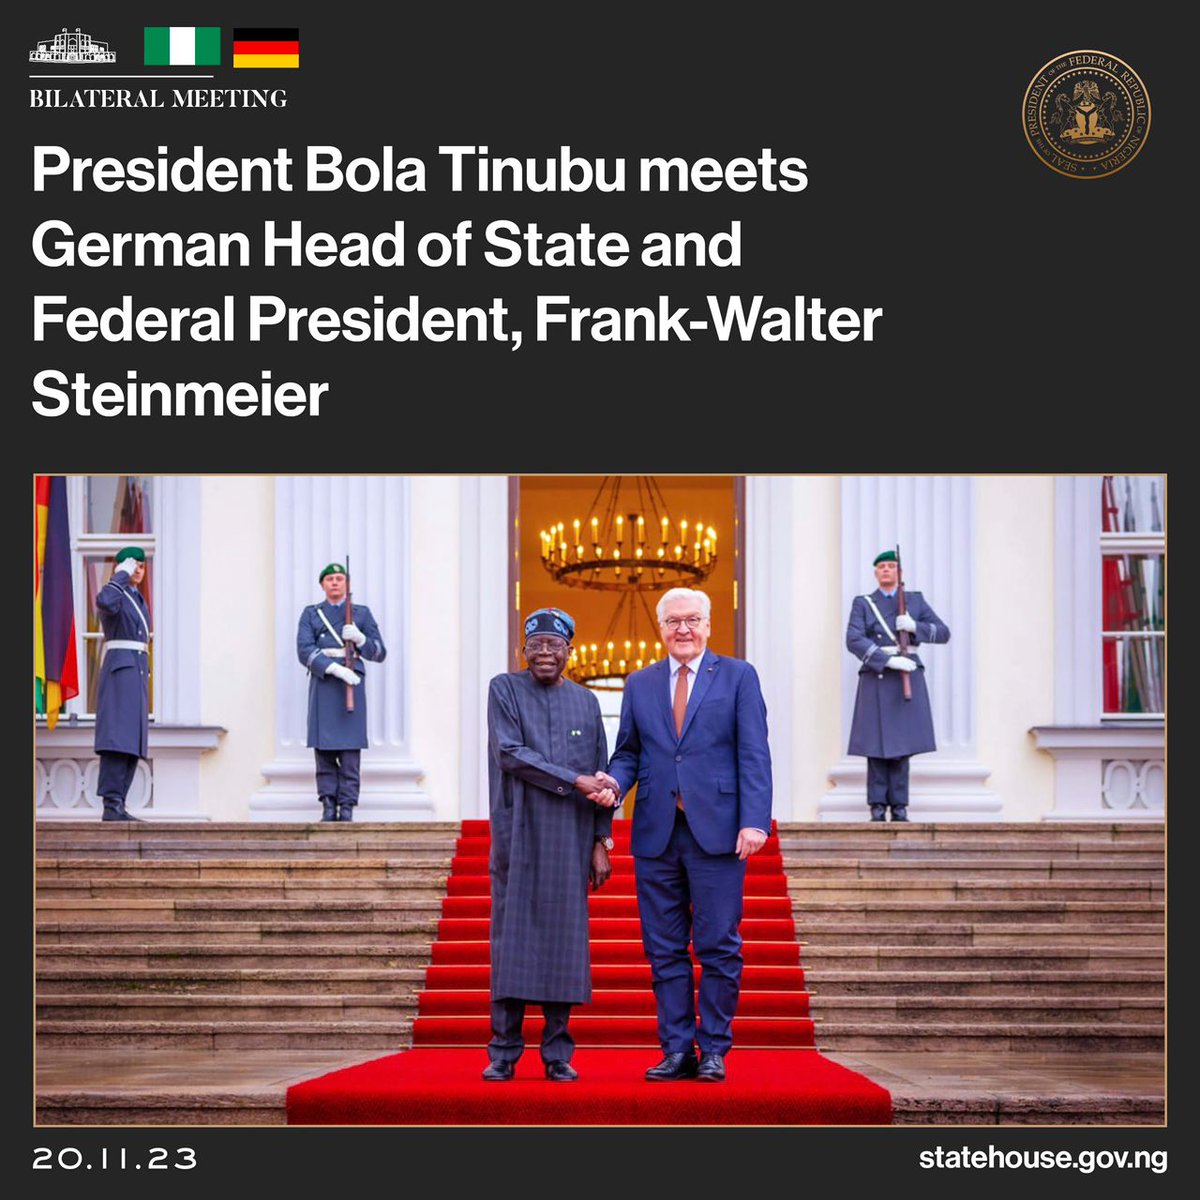 President Bola Tinubu meets German Head of State and Federal President, Frank-Walter Steinmeier

#PBATInBerlin